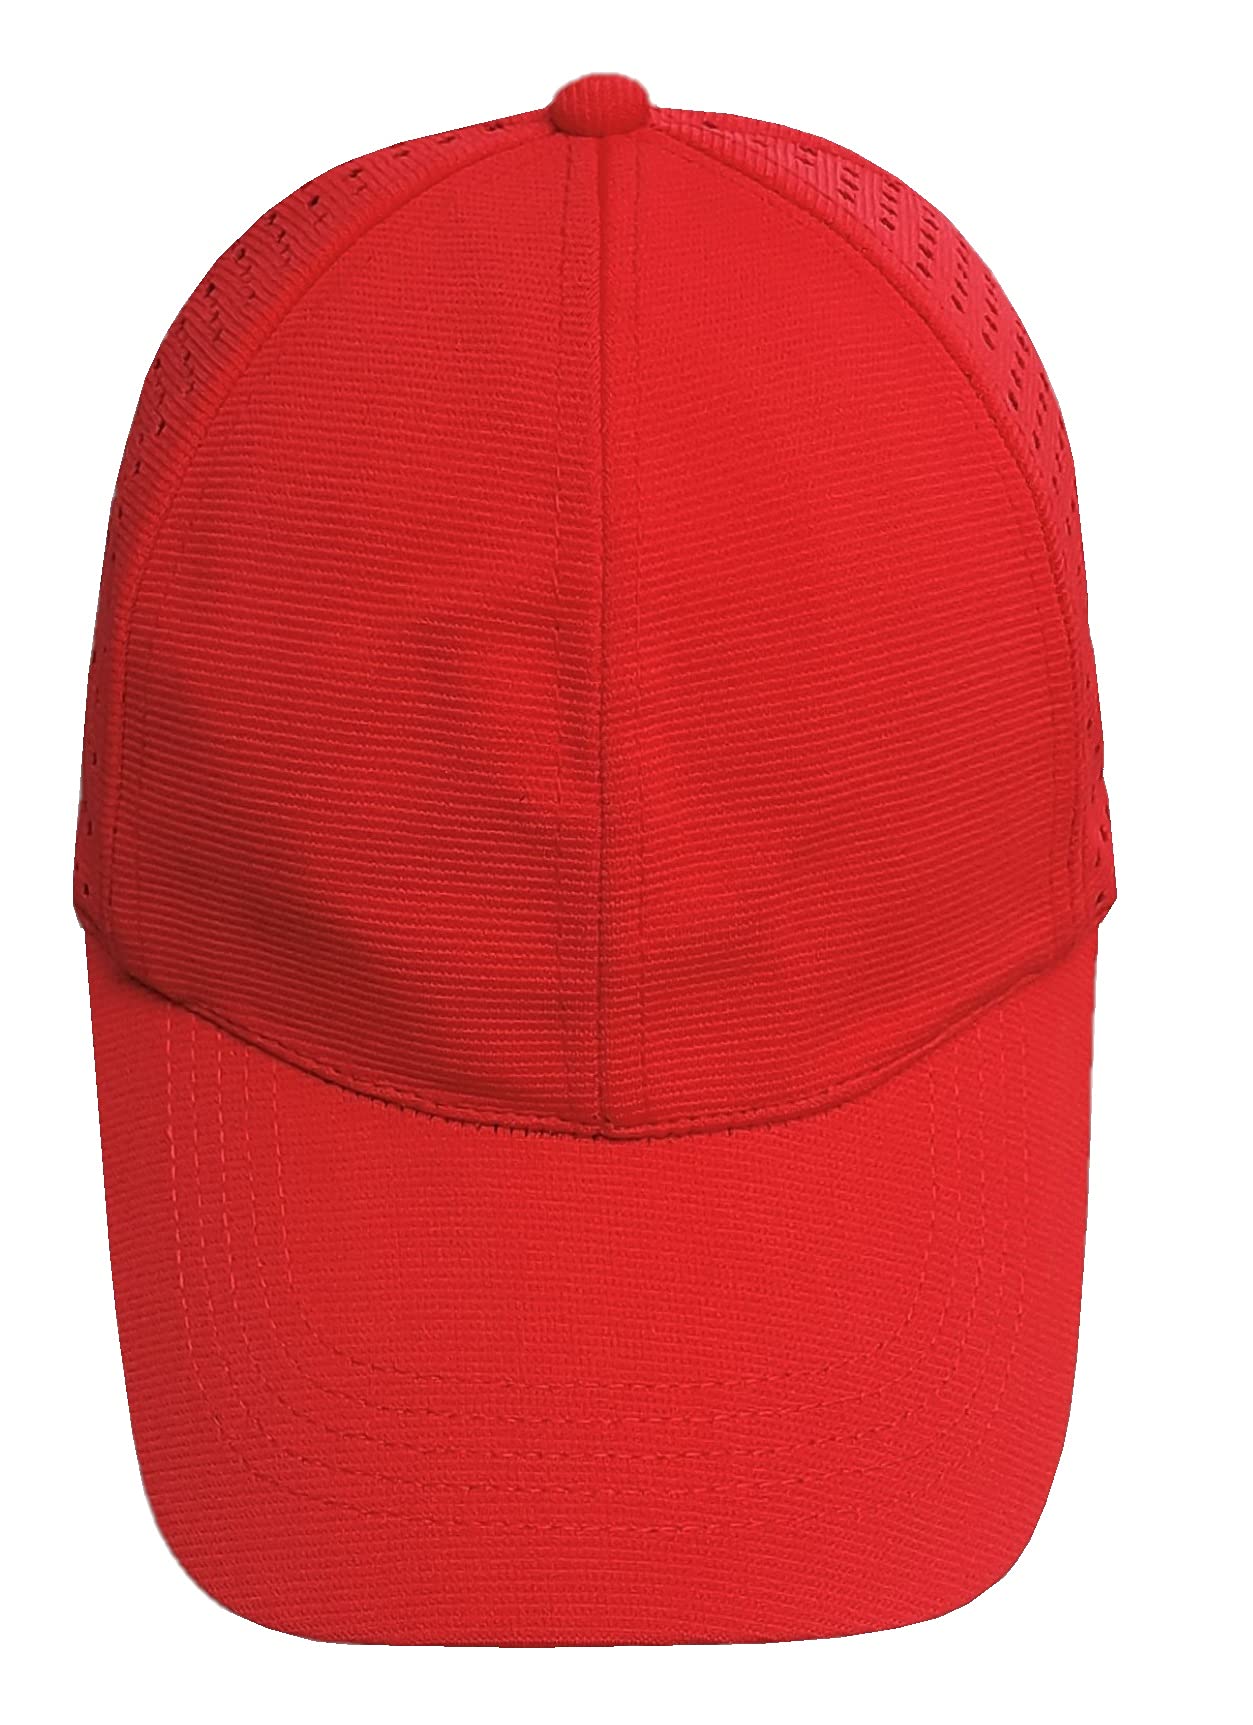 Sports Plain red Racing Fancy mesh Dance Hats Party caps for Men